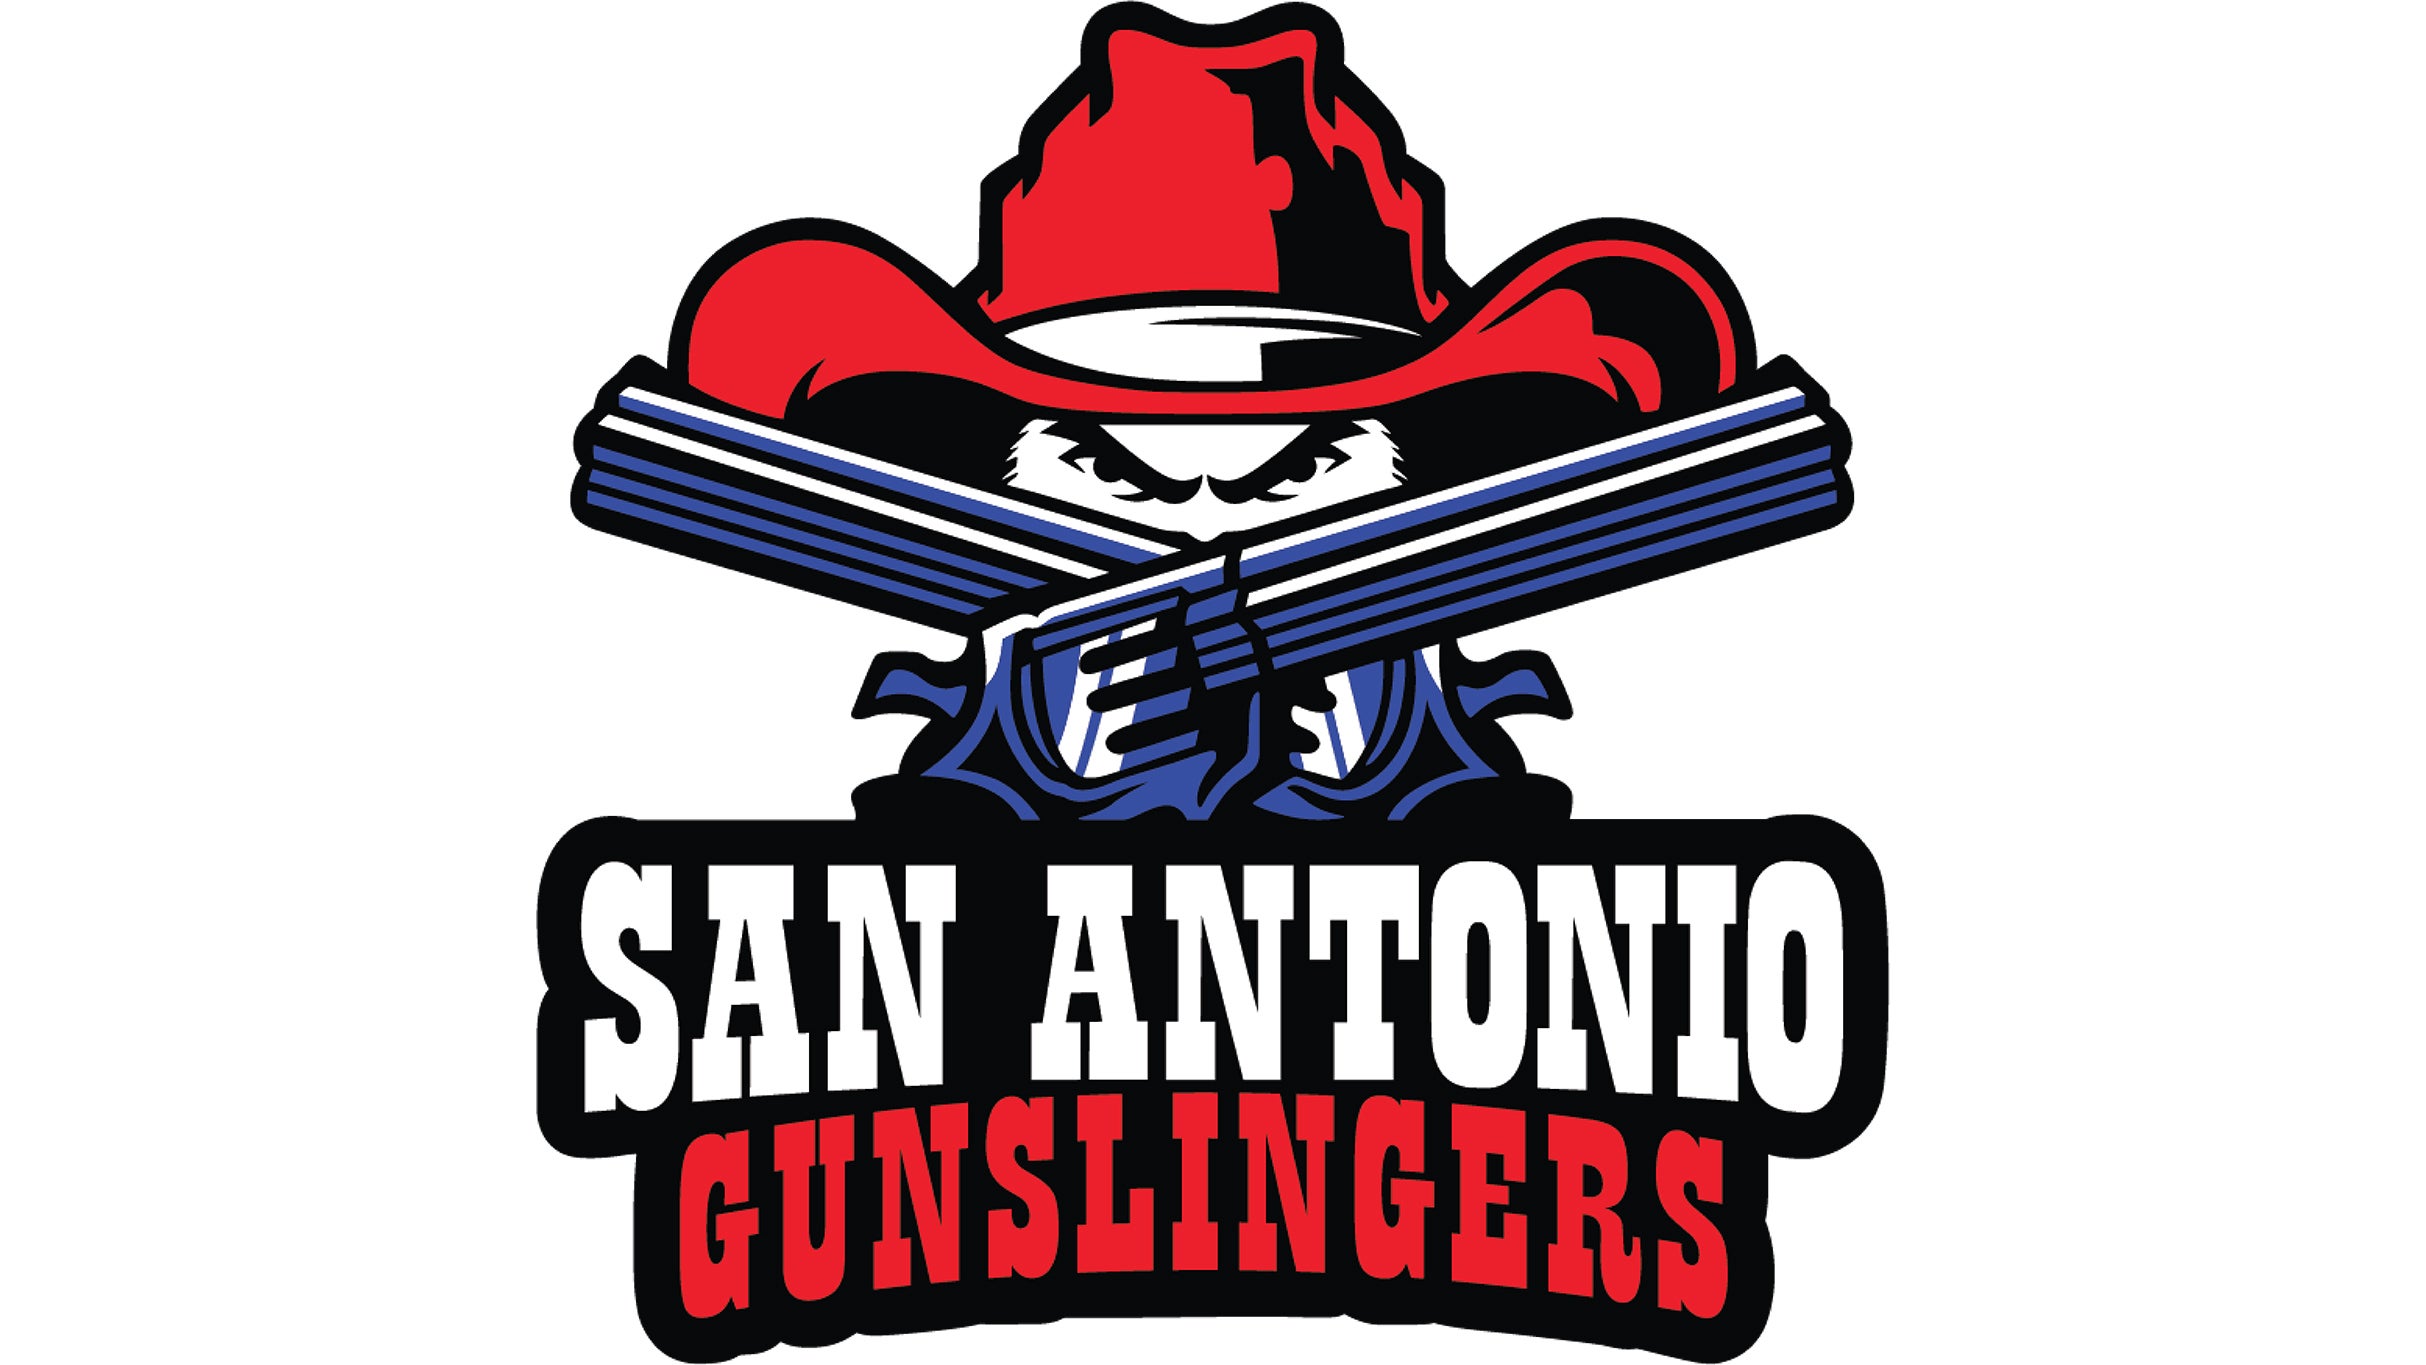 San Antonio Gunslingers vs. Arizona Rattlers